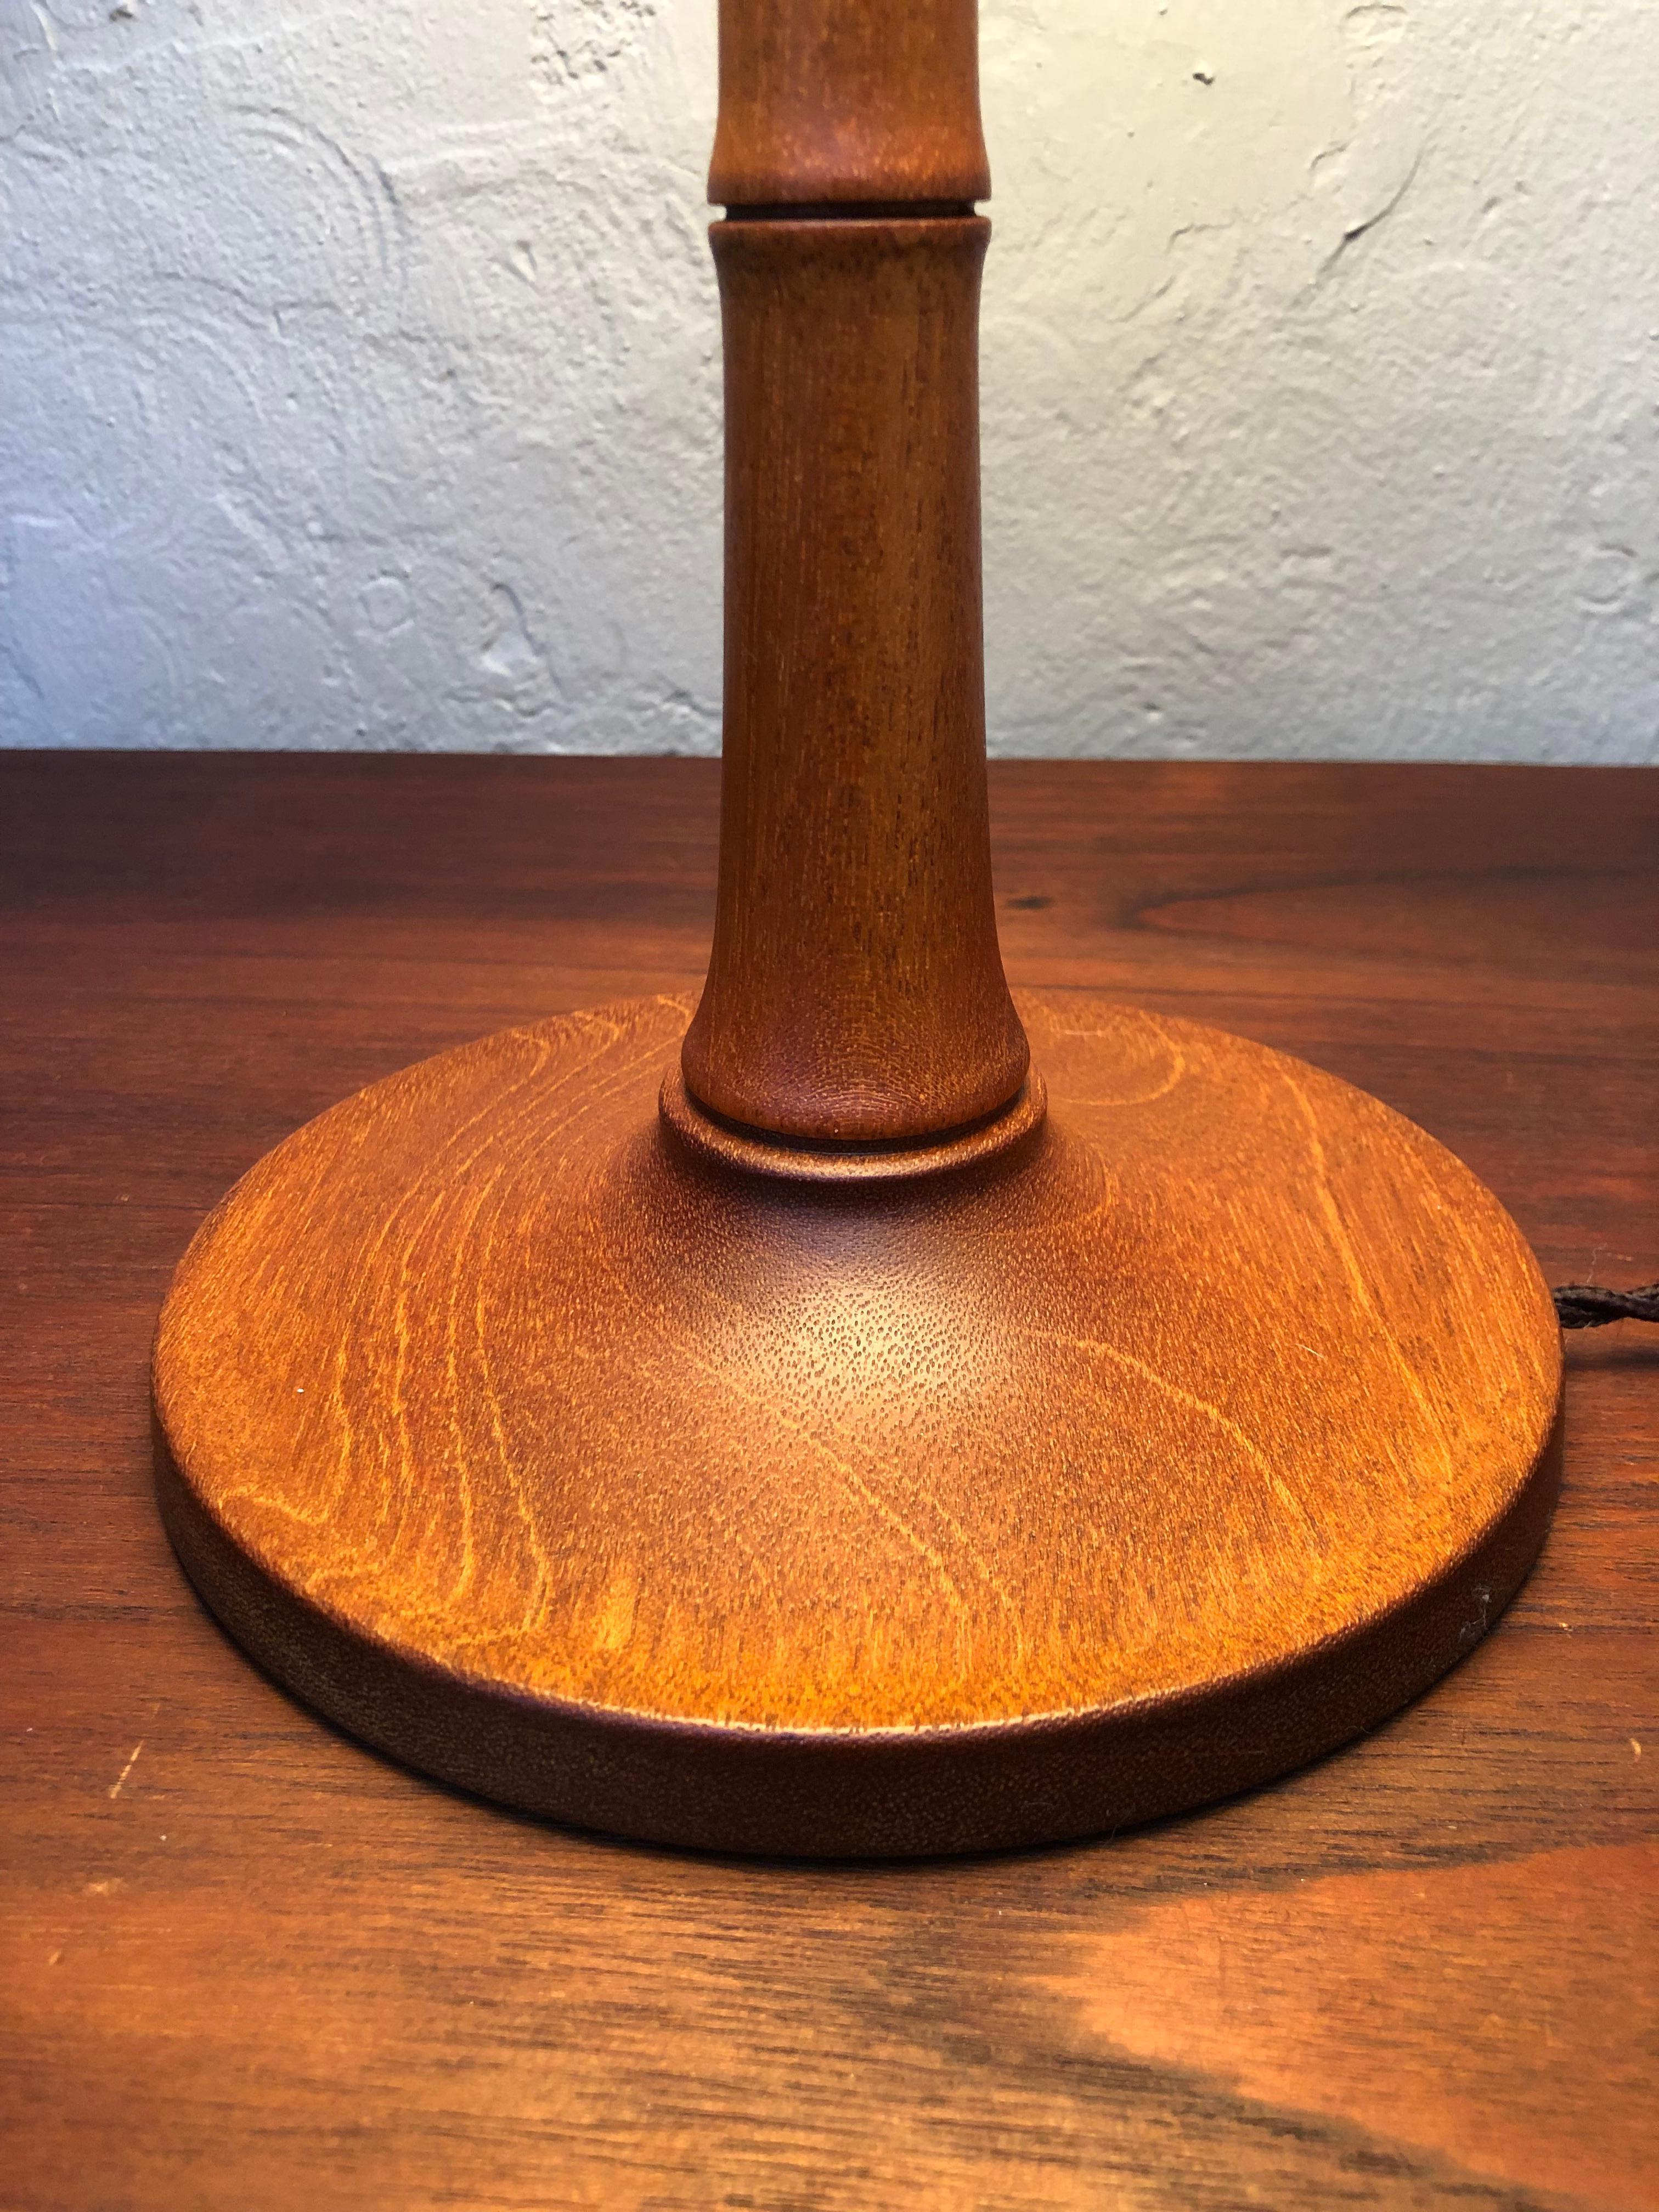 Danish A Vintage Teak Table Lamp by Esben Klint for Le Klint from the 1940s For Sale